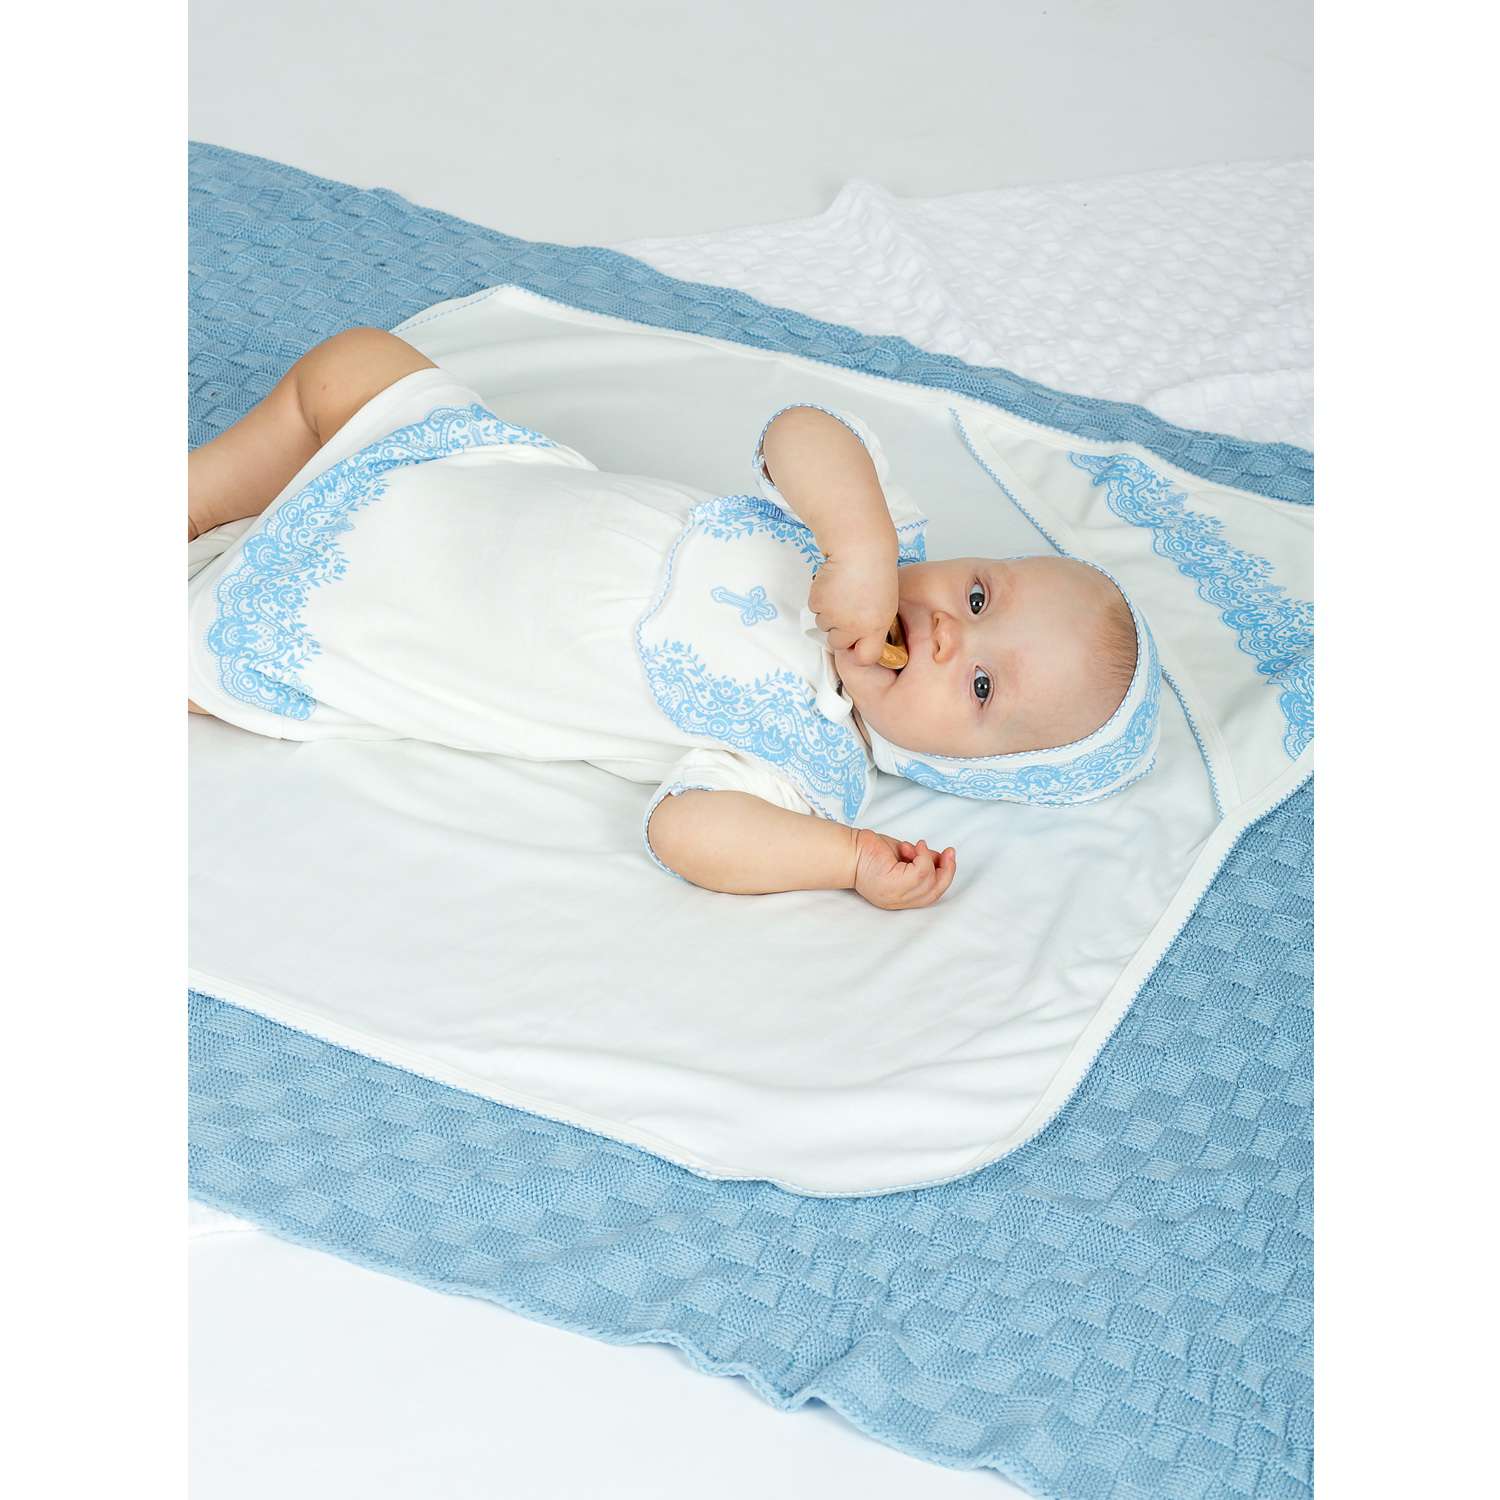 Крестильный набор KiMMi Baby Кб-1308081 молочный-голубой - фото 3